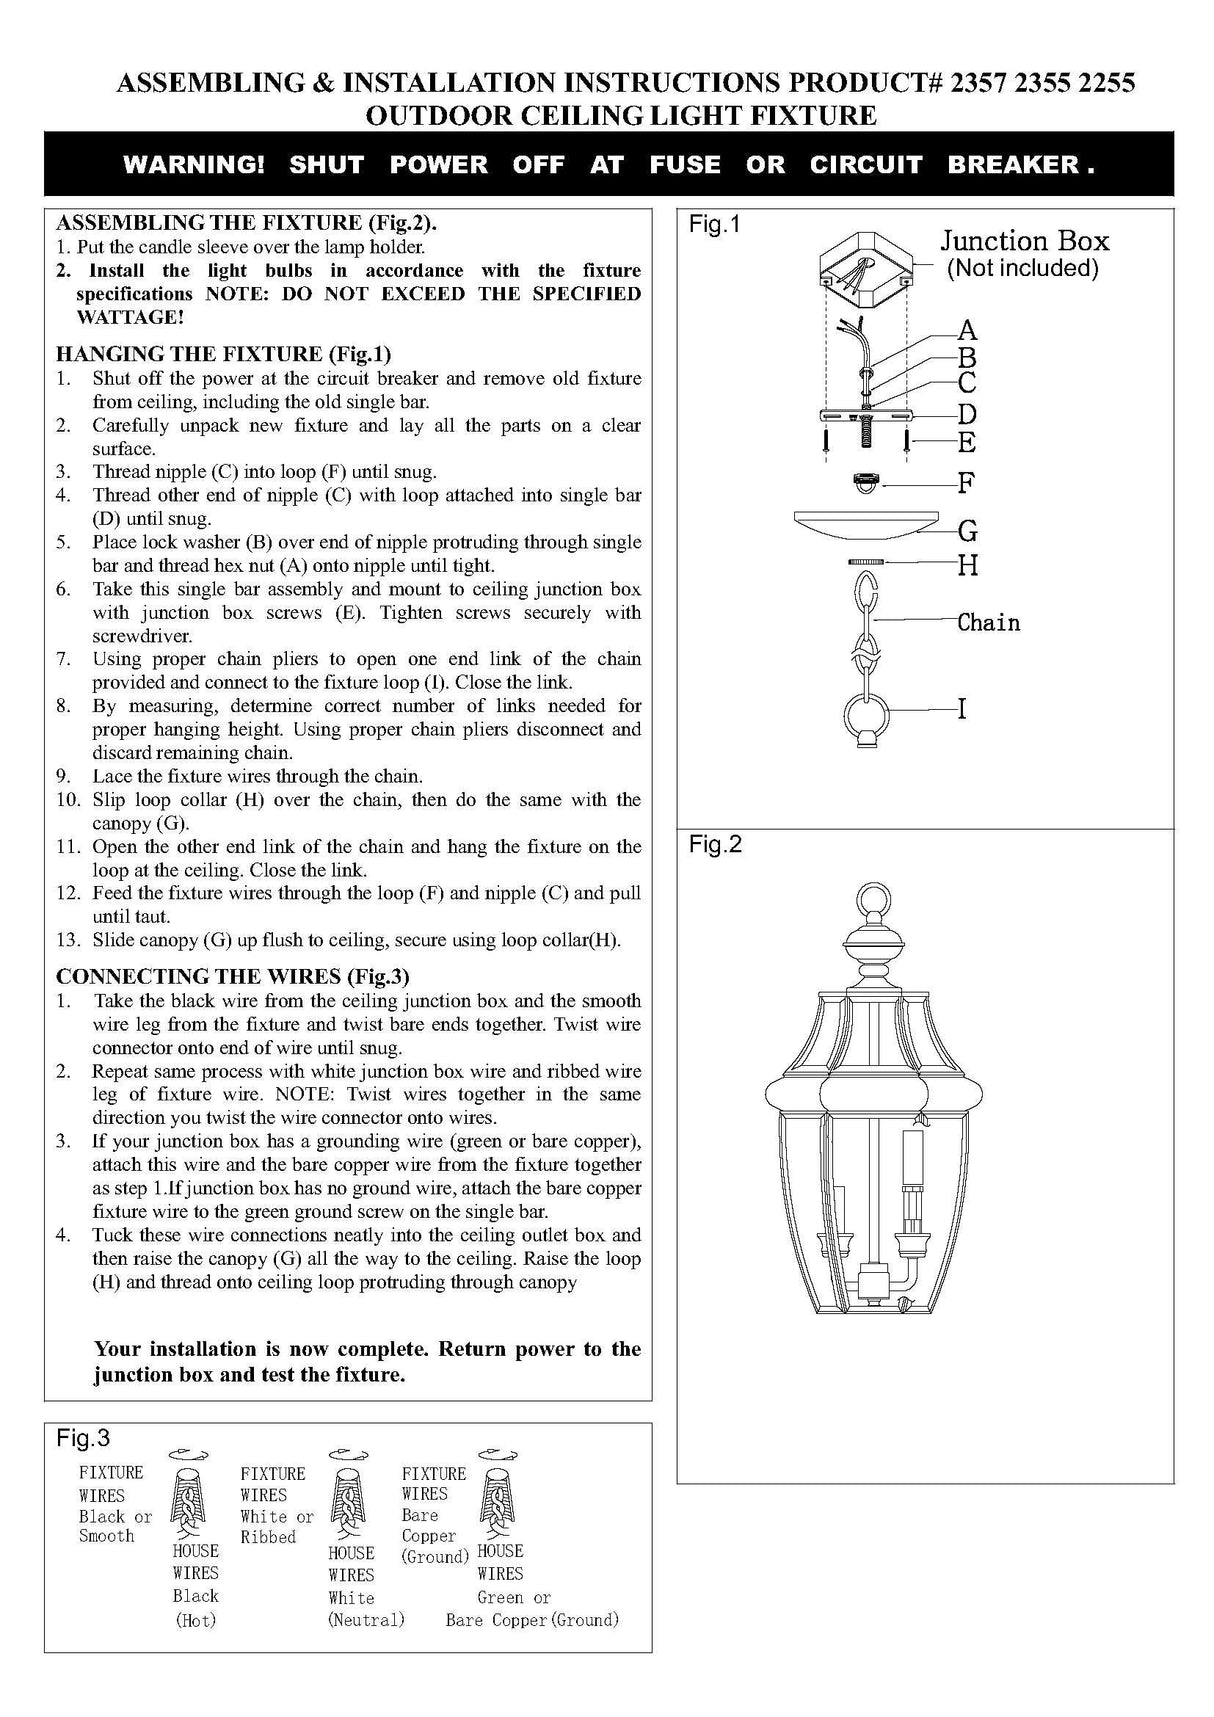 Livex Lighting 2355-01 Monterey 3-Light Outdoor Hanging Lantern, Antique Brass